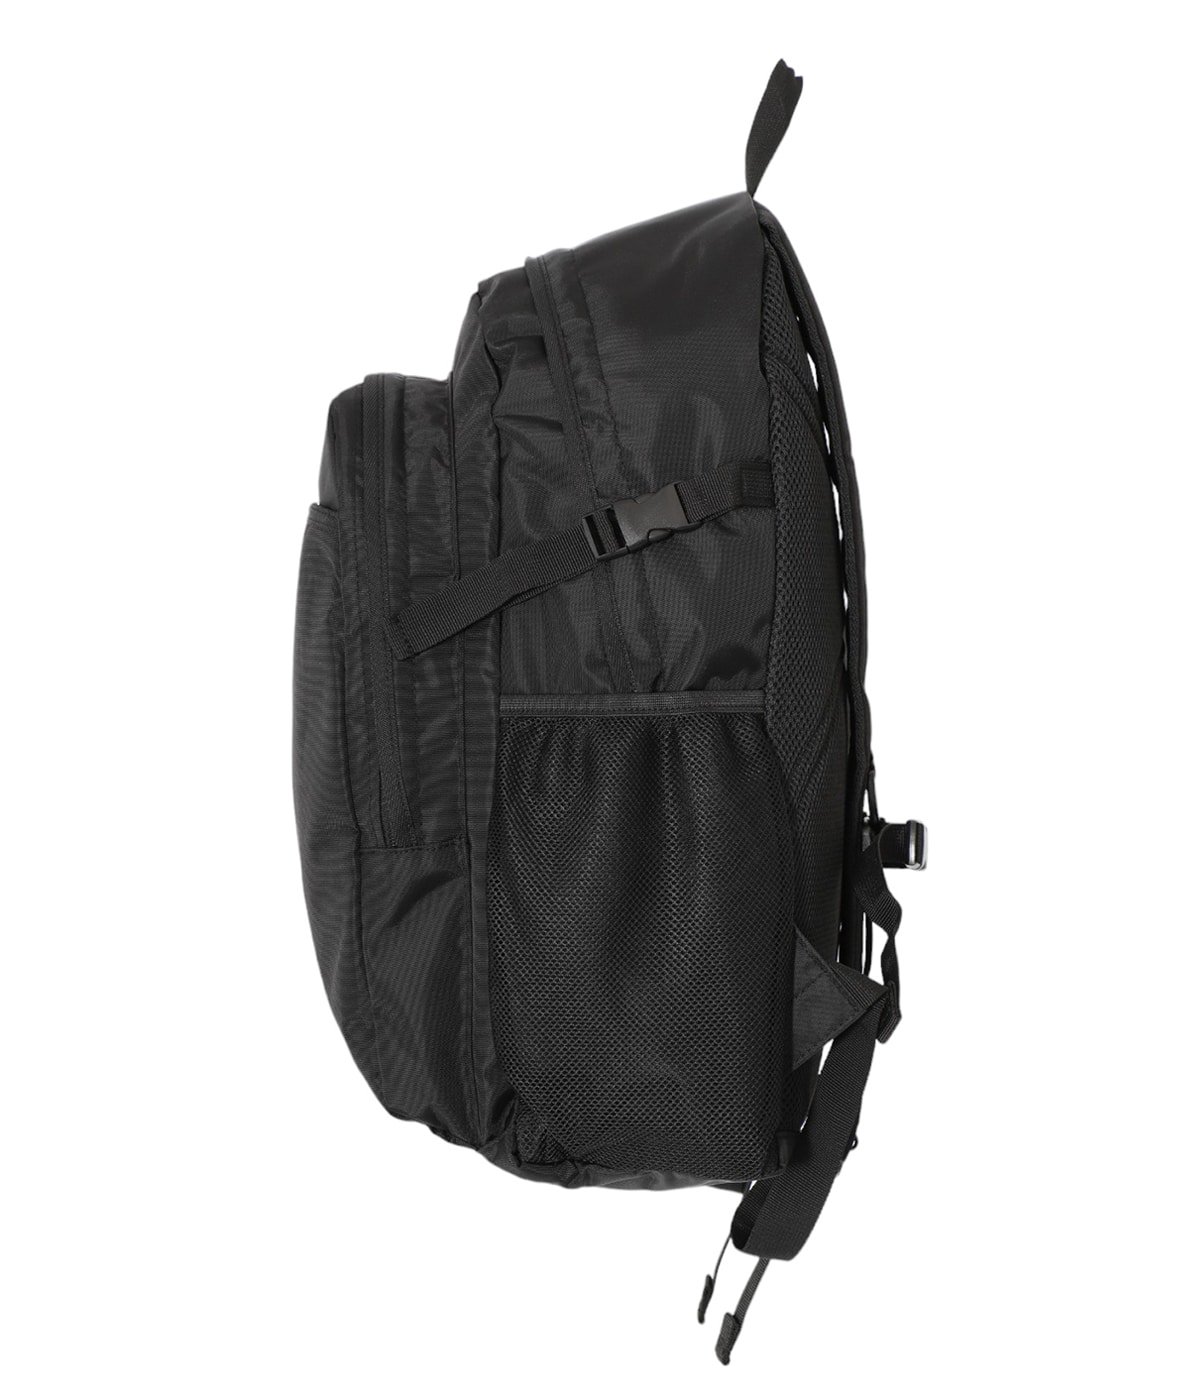 Sport Backpack | BOTT(ボット) / バッグ バックパック (メンズ)の通販 ...